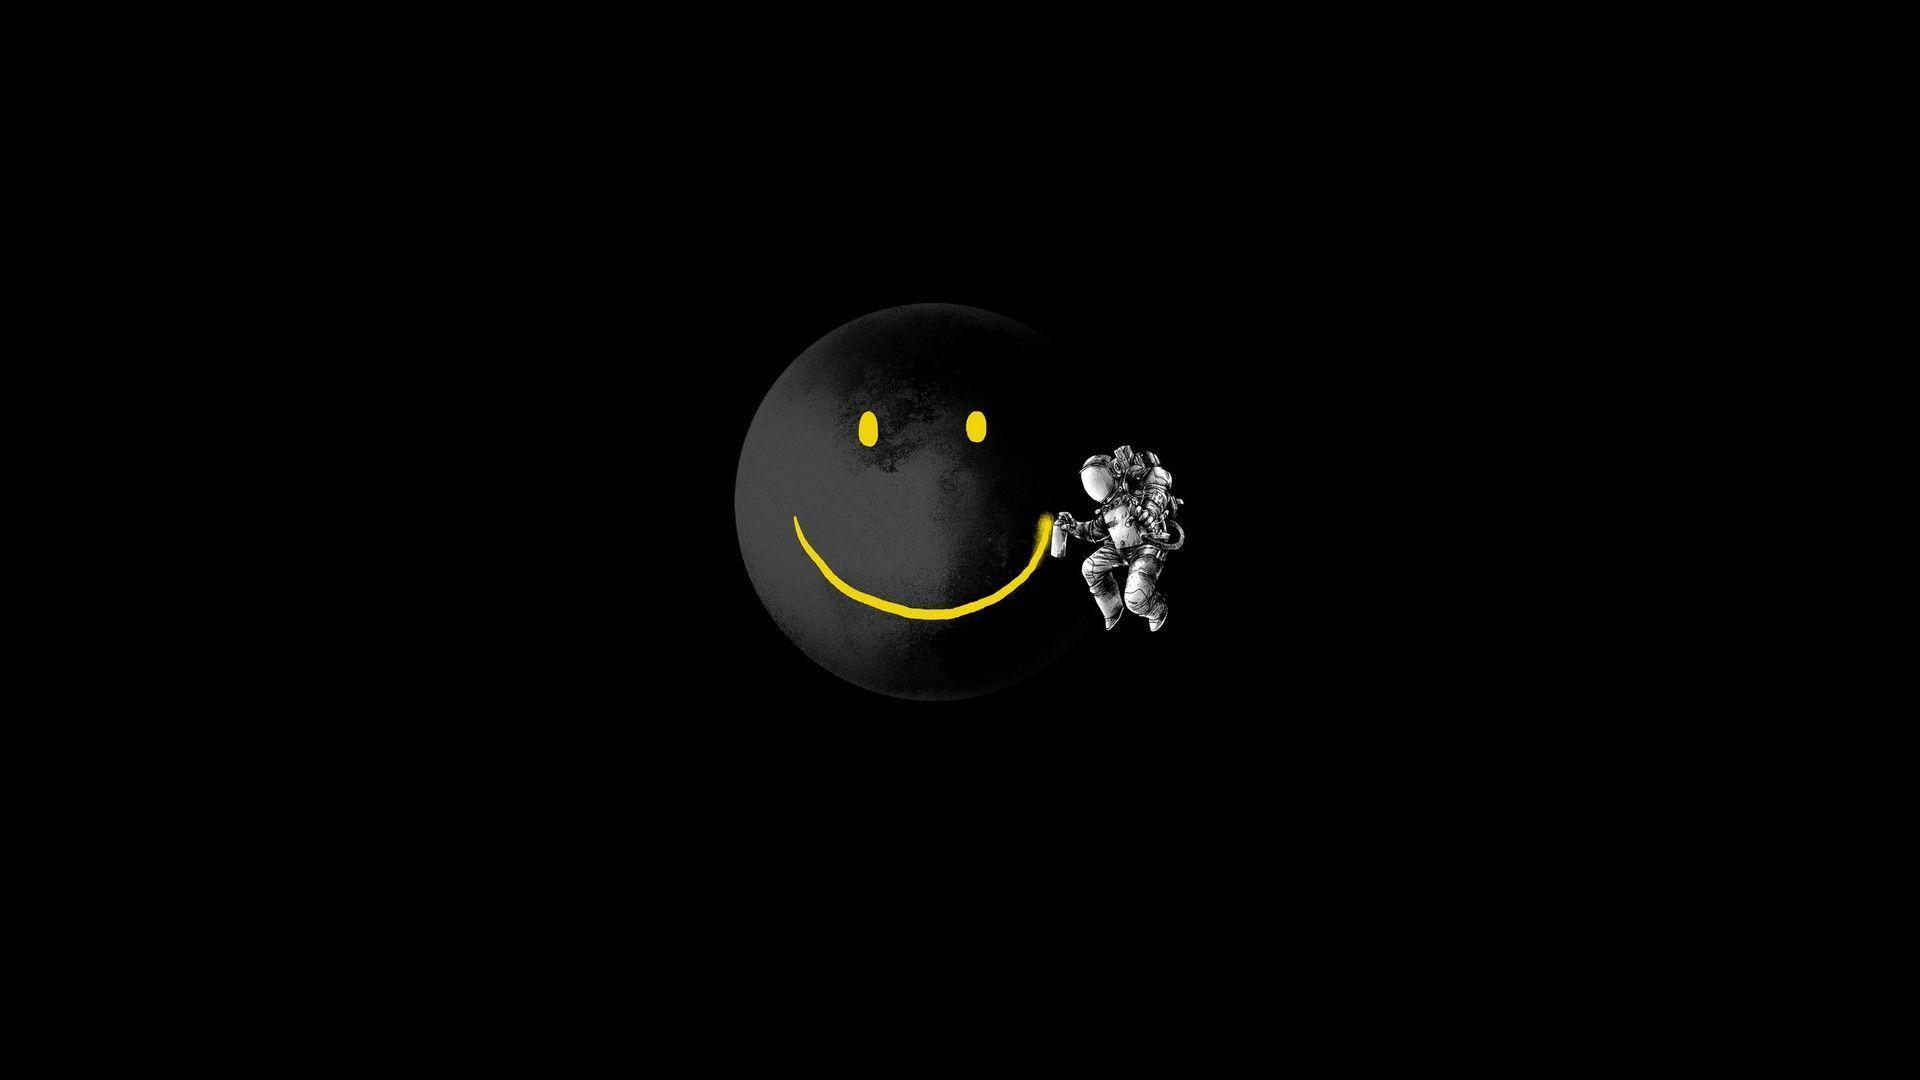 Smiley Face Spaceman Black Background 1920a Desktop Image